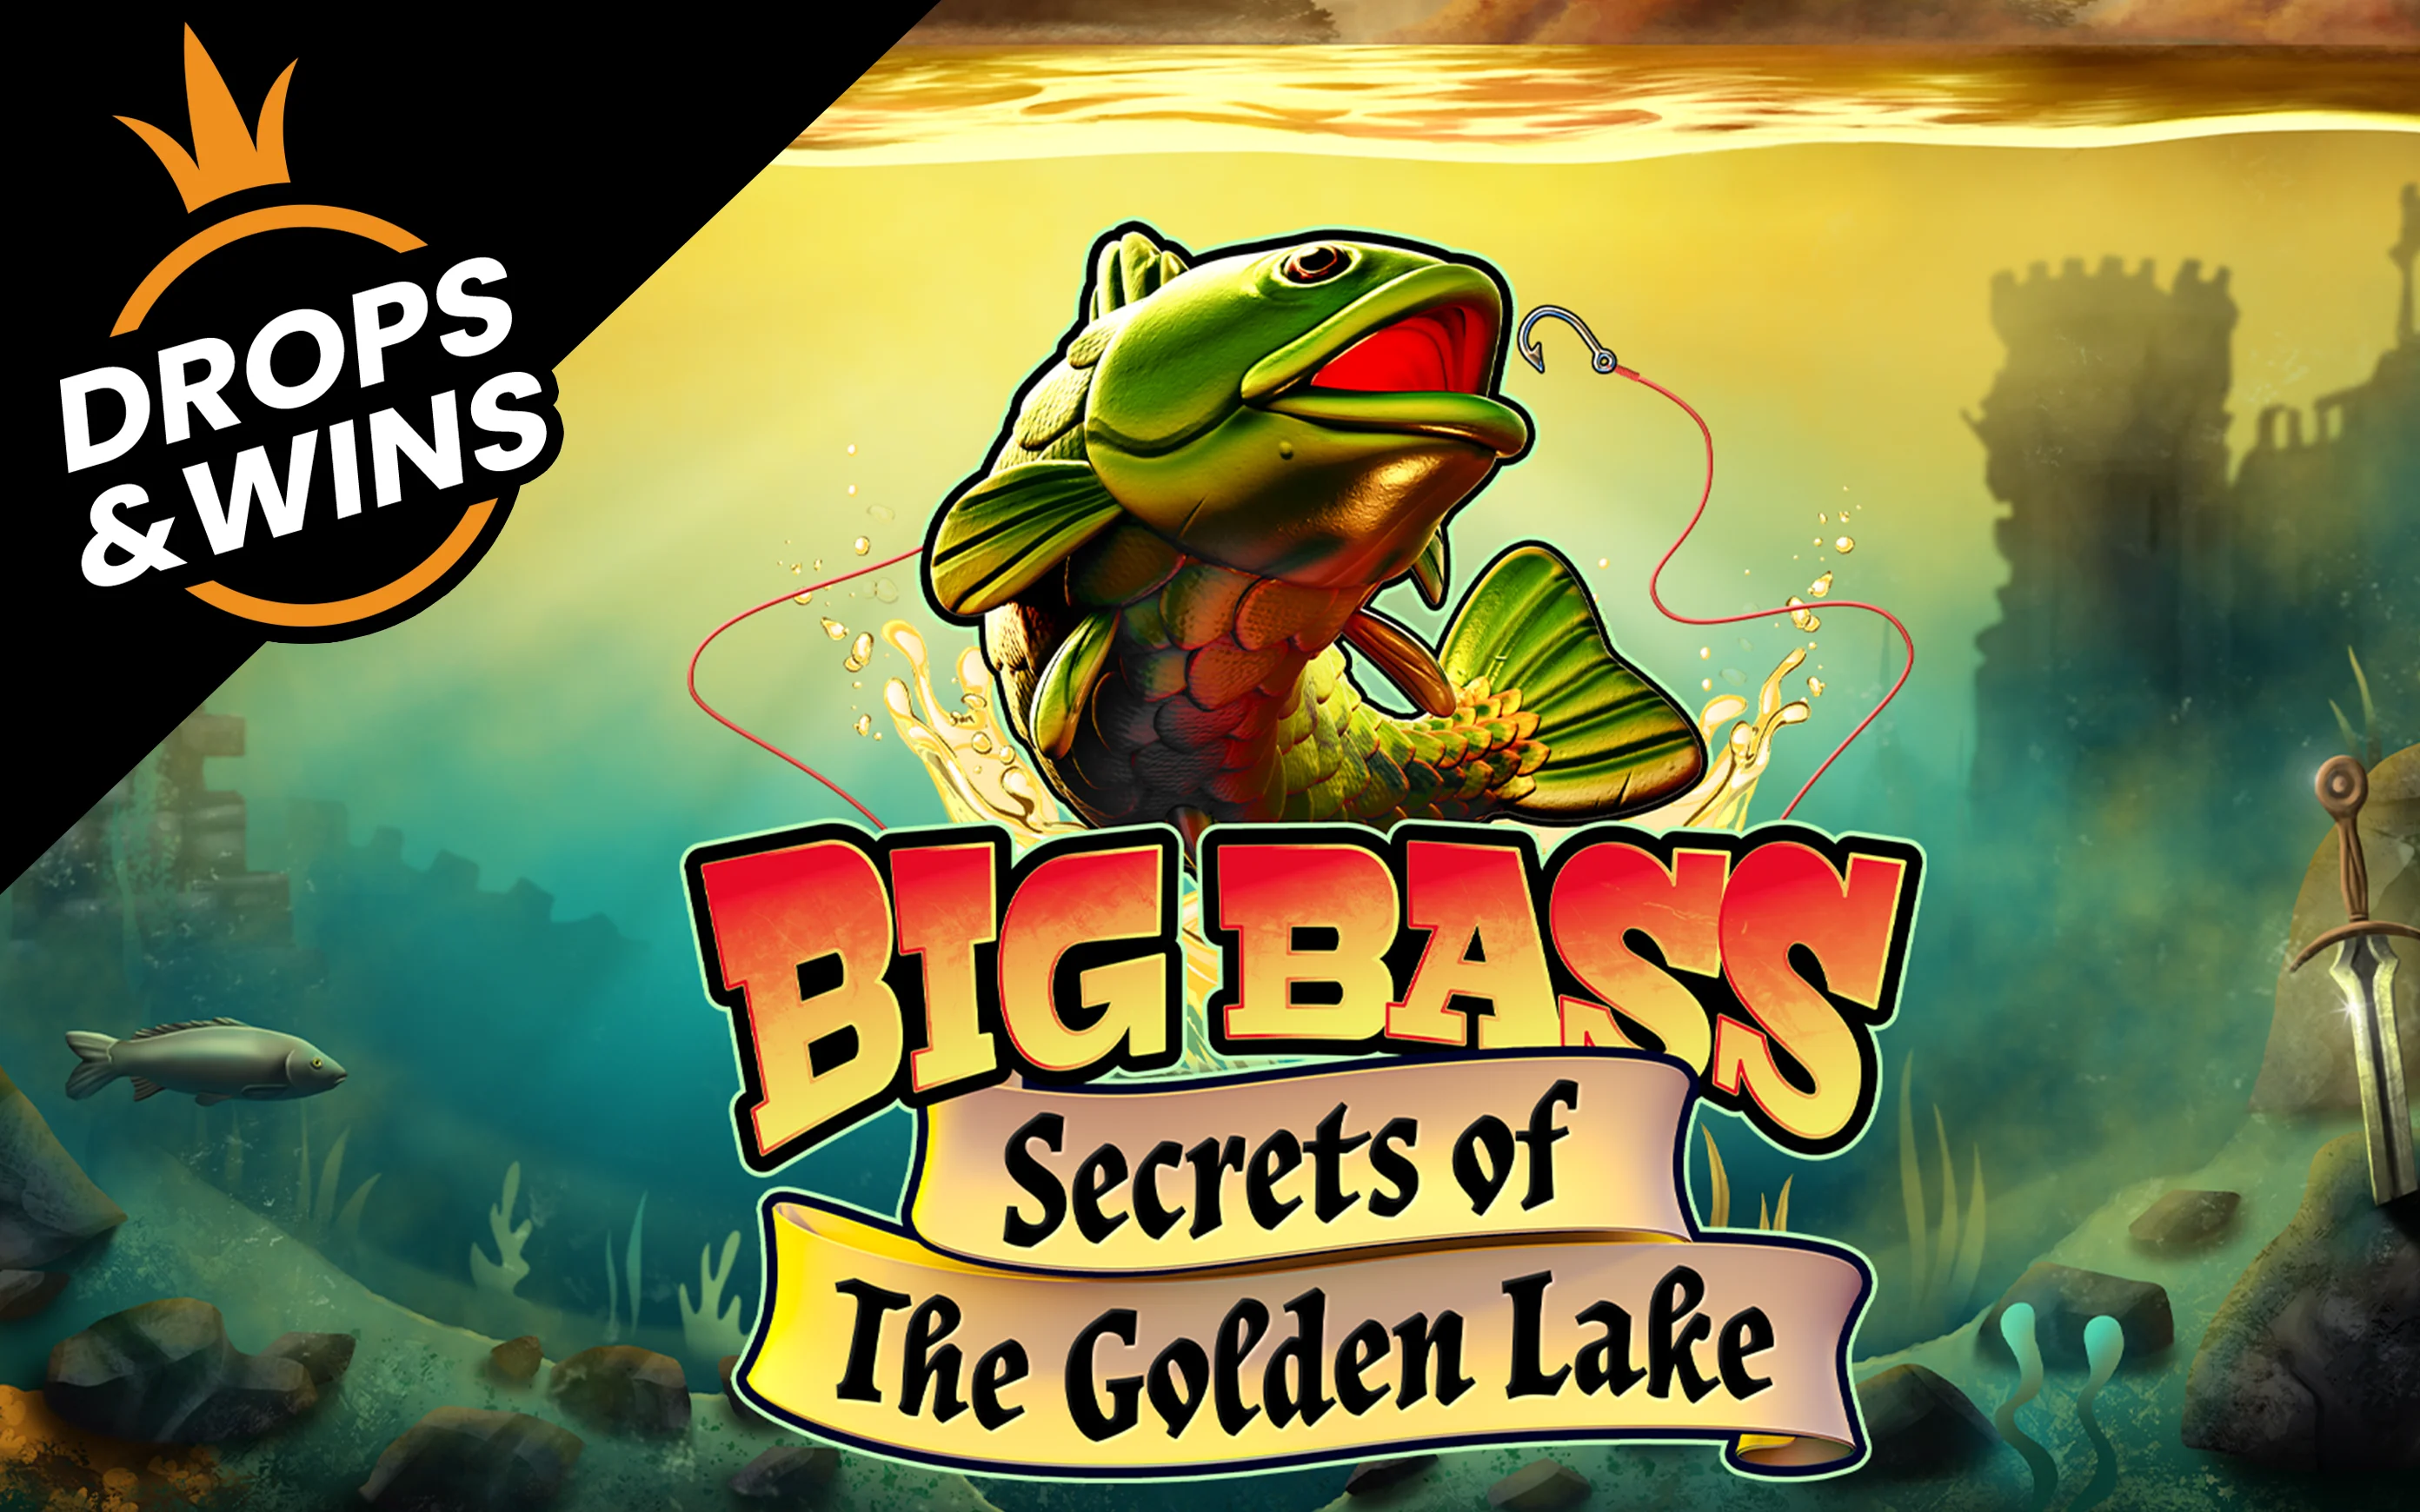 Starcasino.be online casino üzerinden Big Bass Secrets of the Golden Lake oynayın